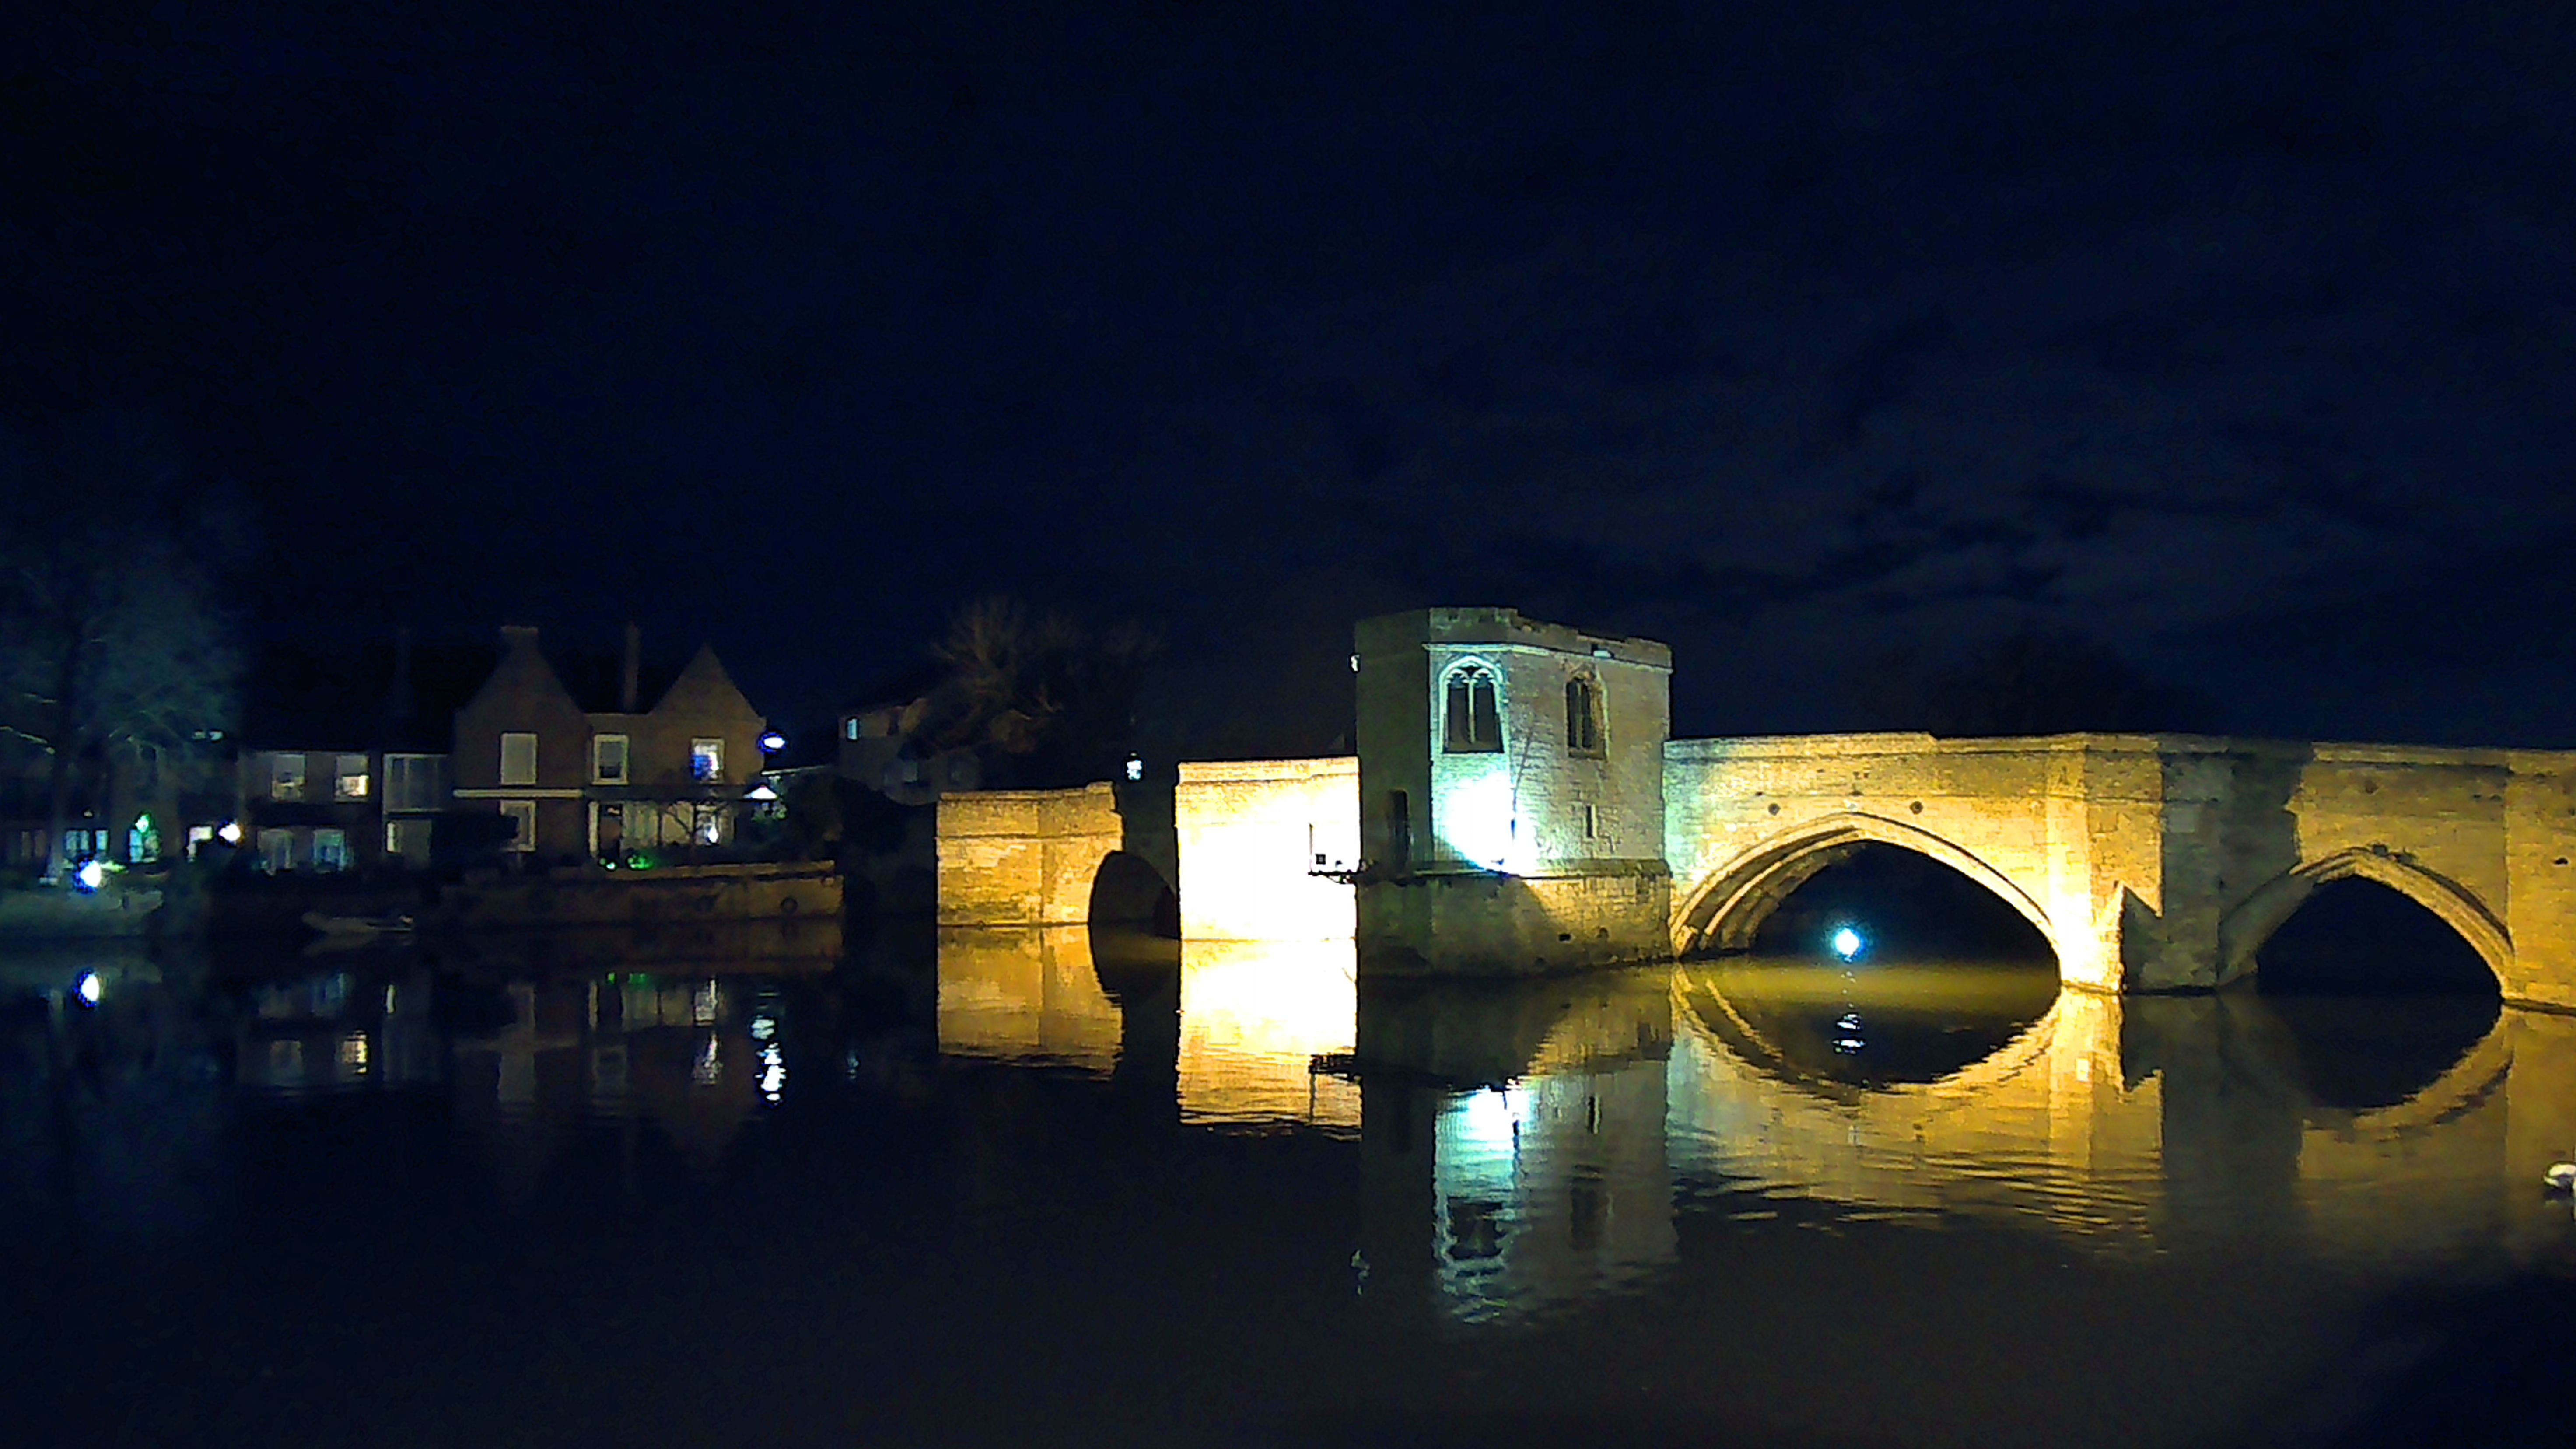 Night photo of a bridge using the night camera mode on the SJCAM SJ20 action camera